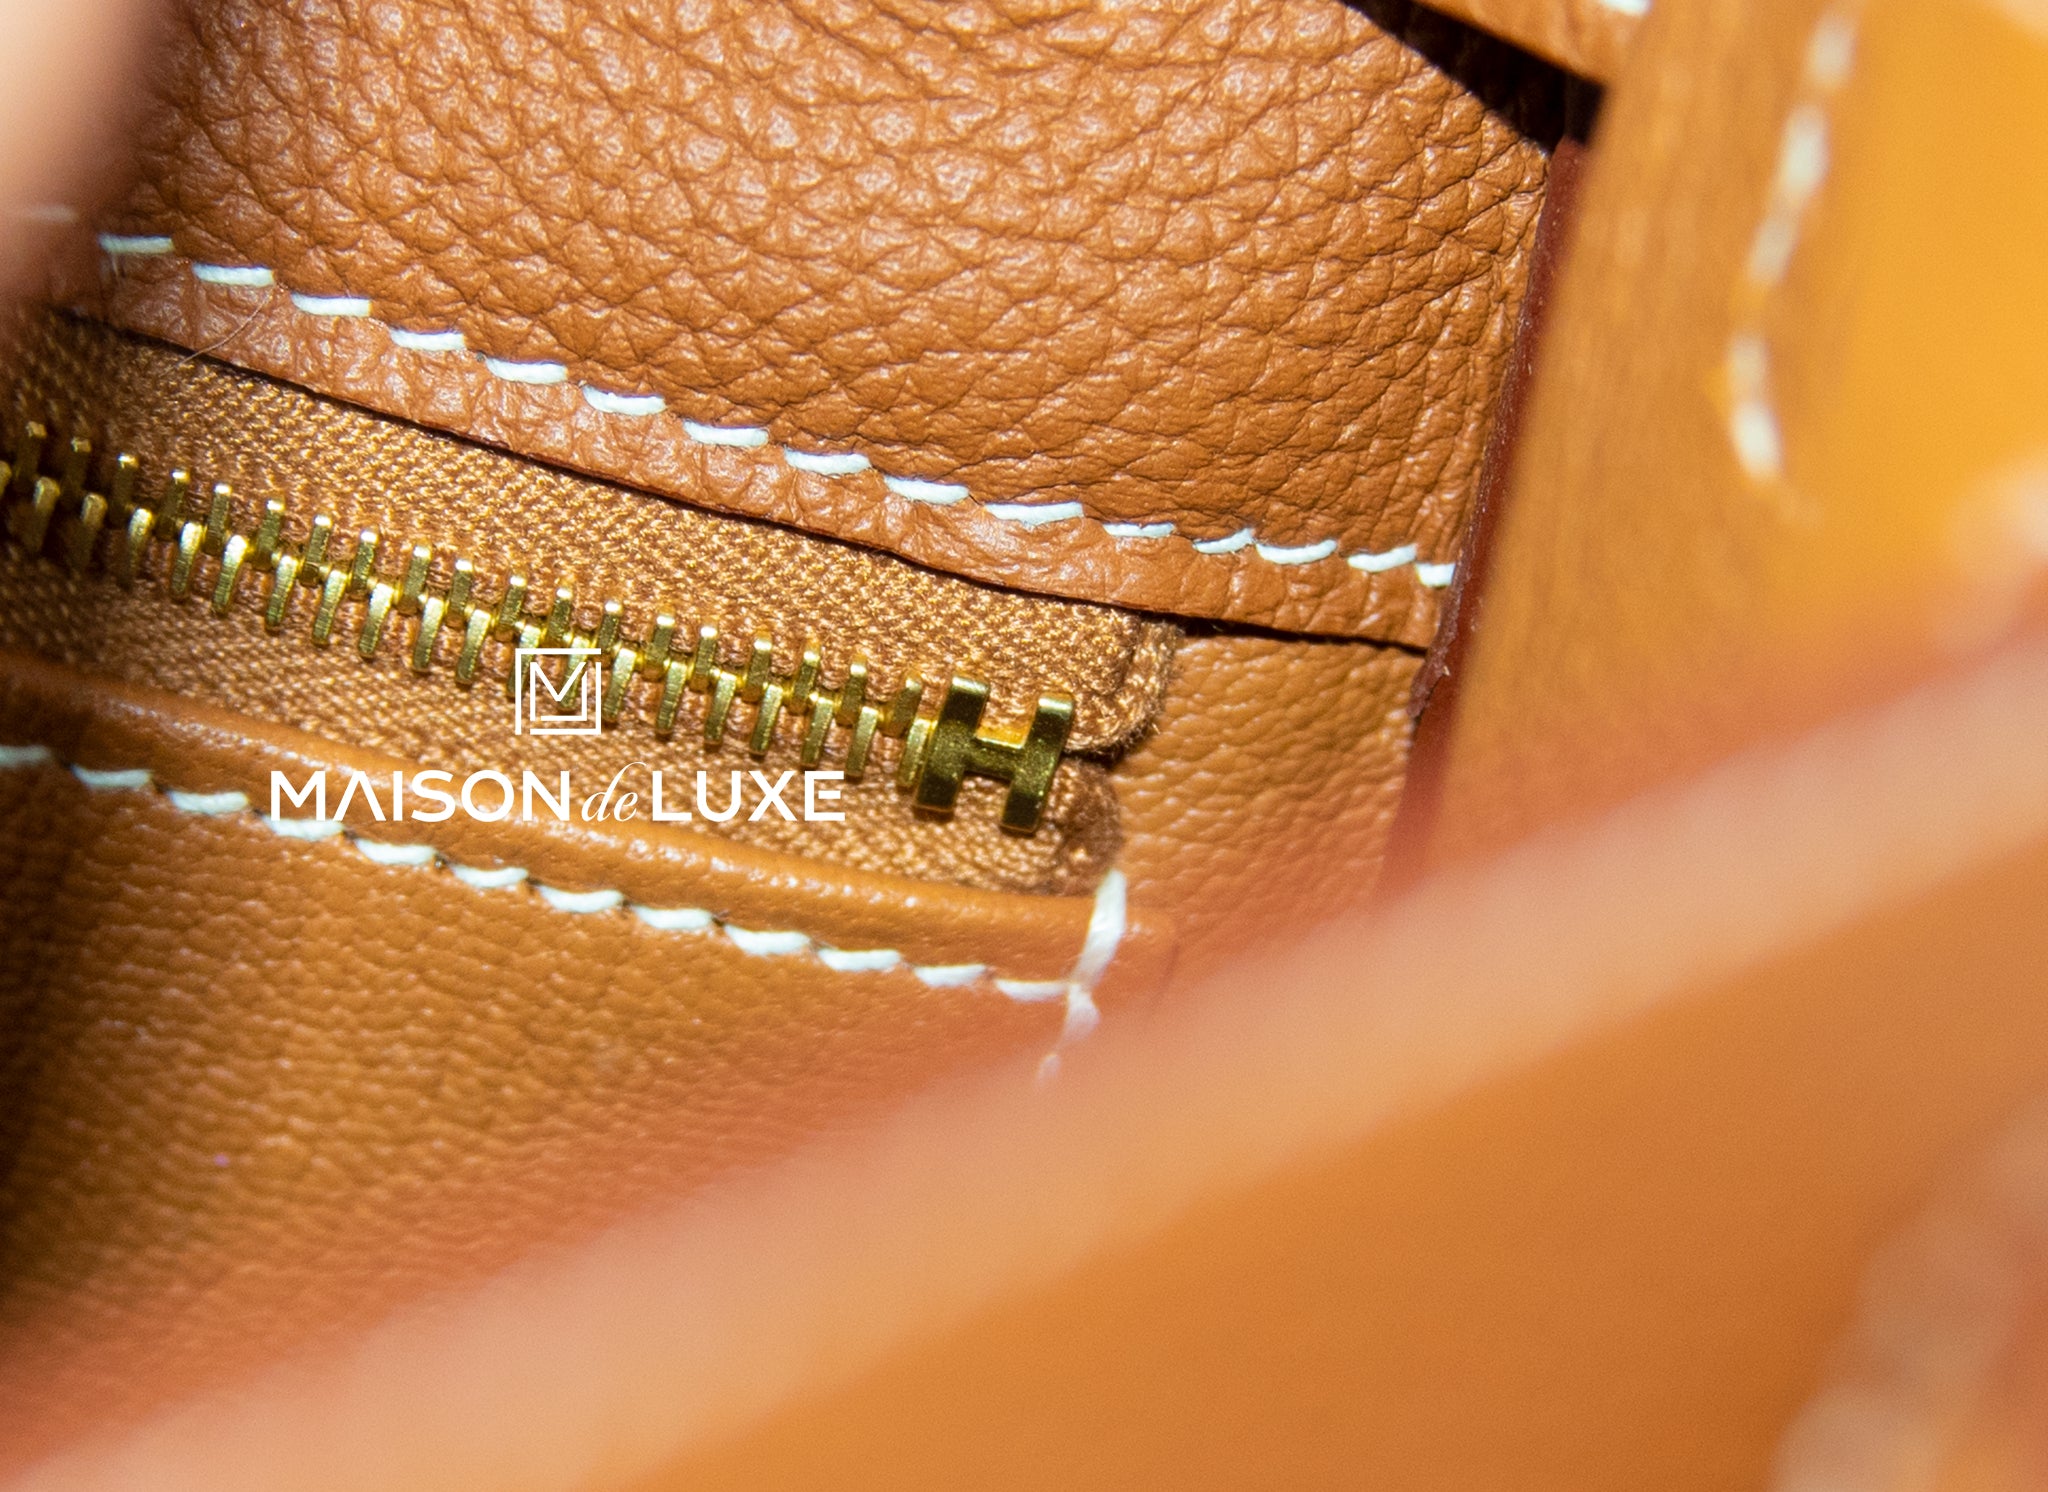 Kelly 28 leather handbag Hermès Brown in Leather - 18783783